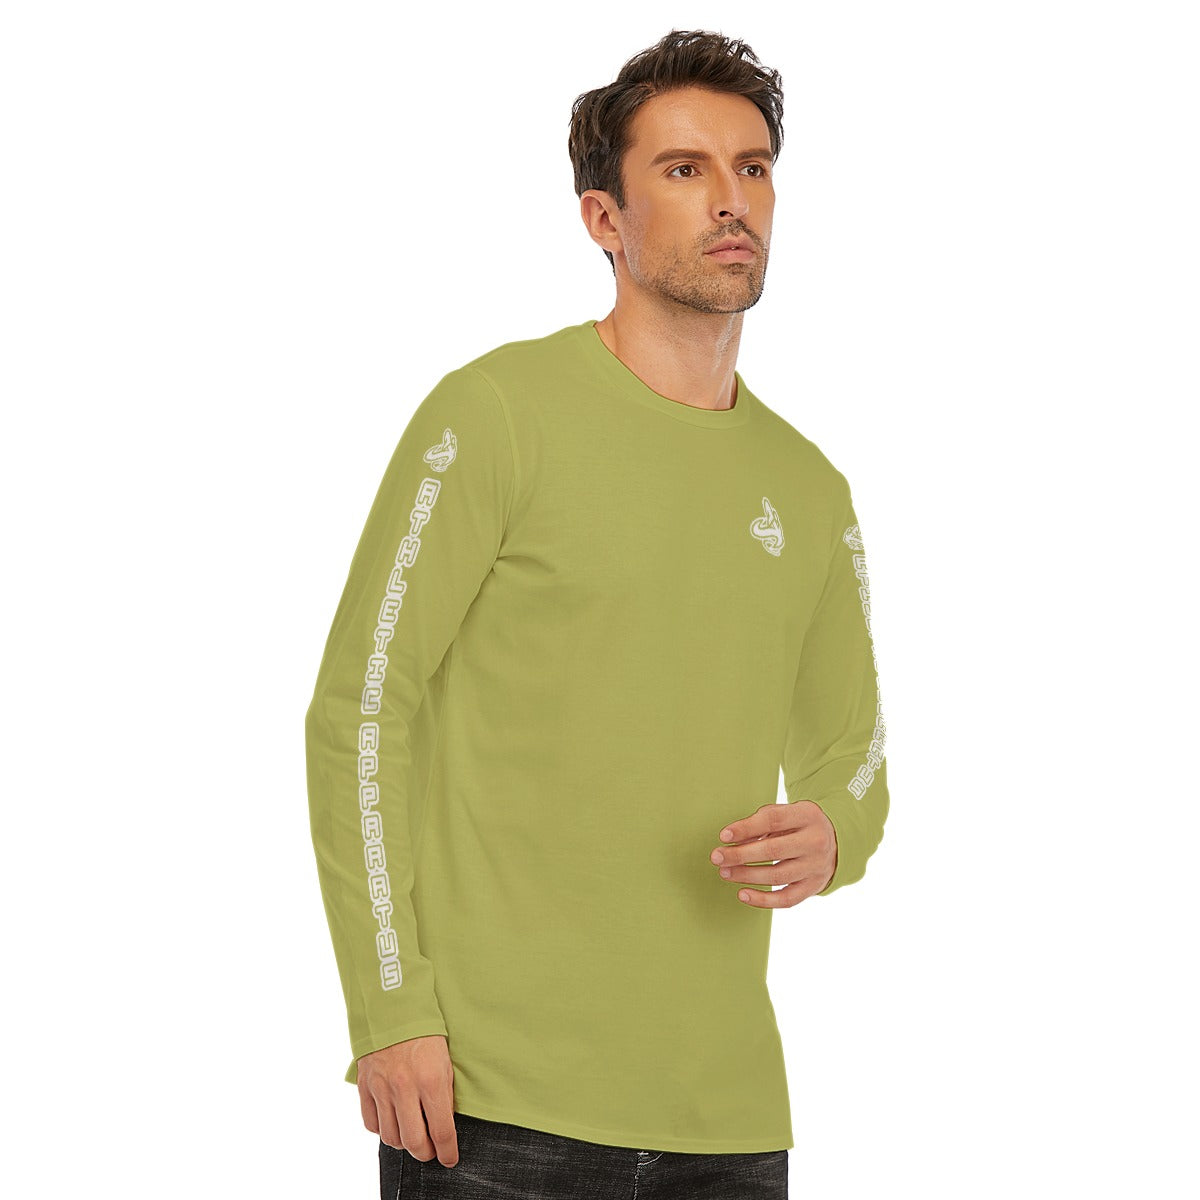 
                  
                    A.A. O. Green V3 WL Long Sleeve T-Shirt Defy The Odds
                  
                